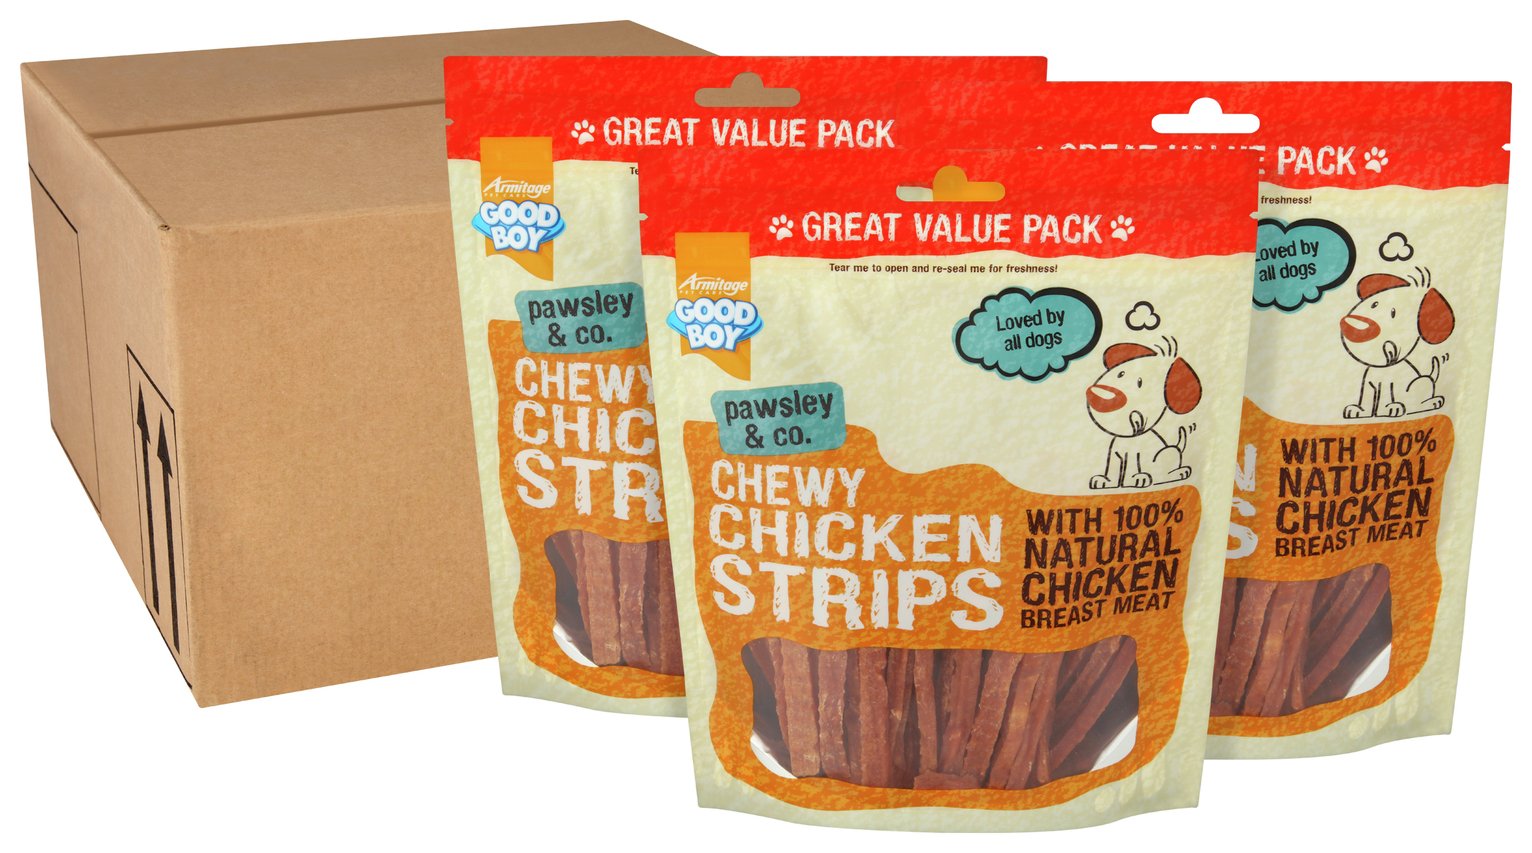 Good Boy Chicken Strips 350g x 3 review